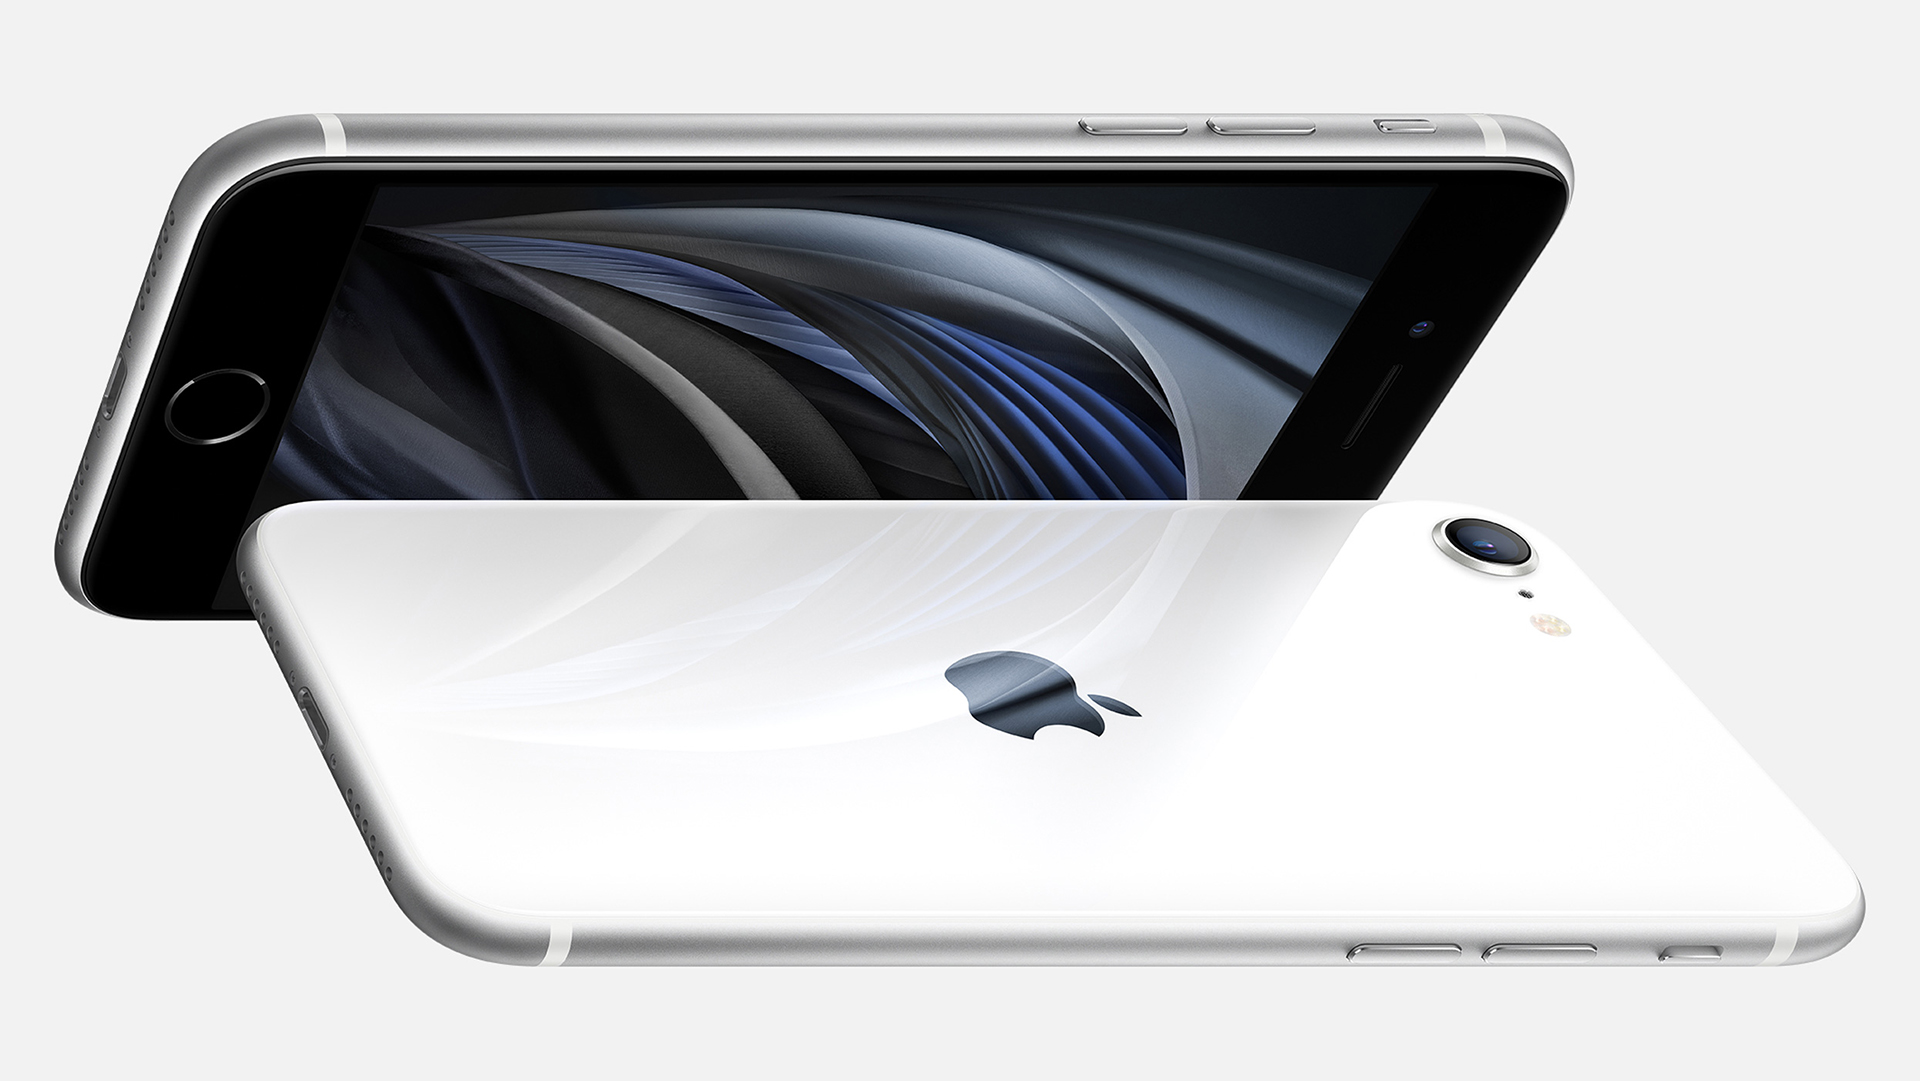 Apple iPhone SE 2020 White